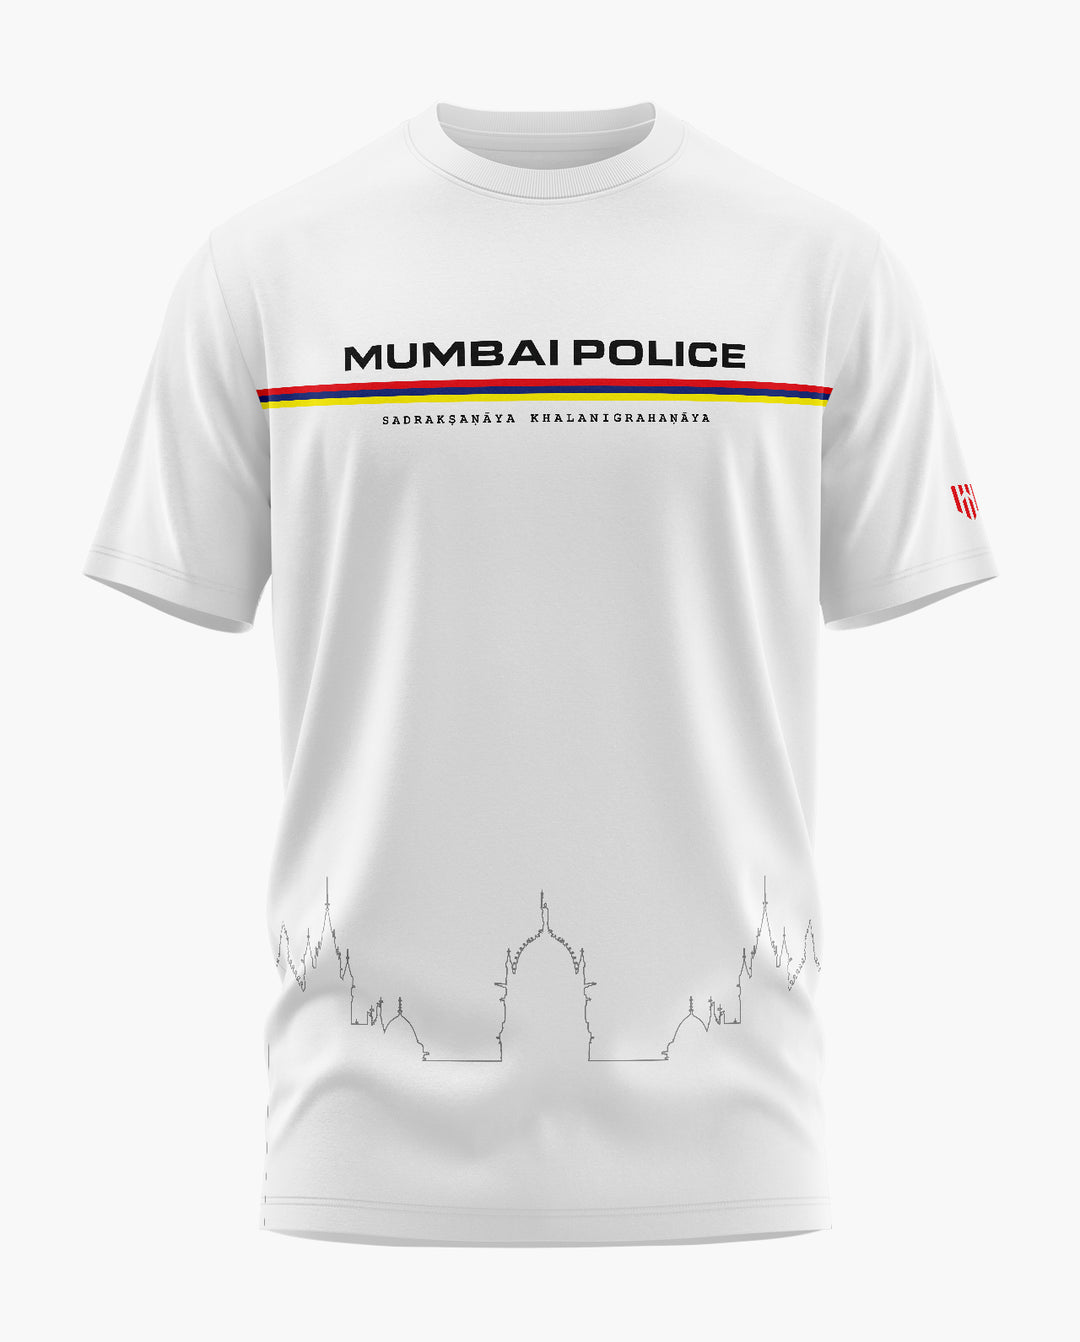 MUMBAI POLICE T-Shirt